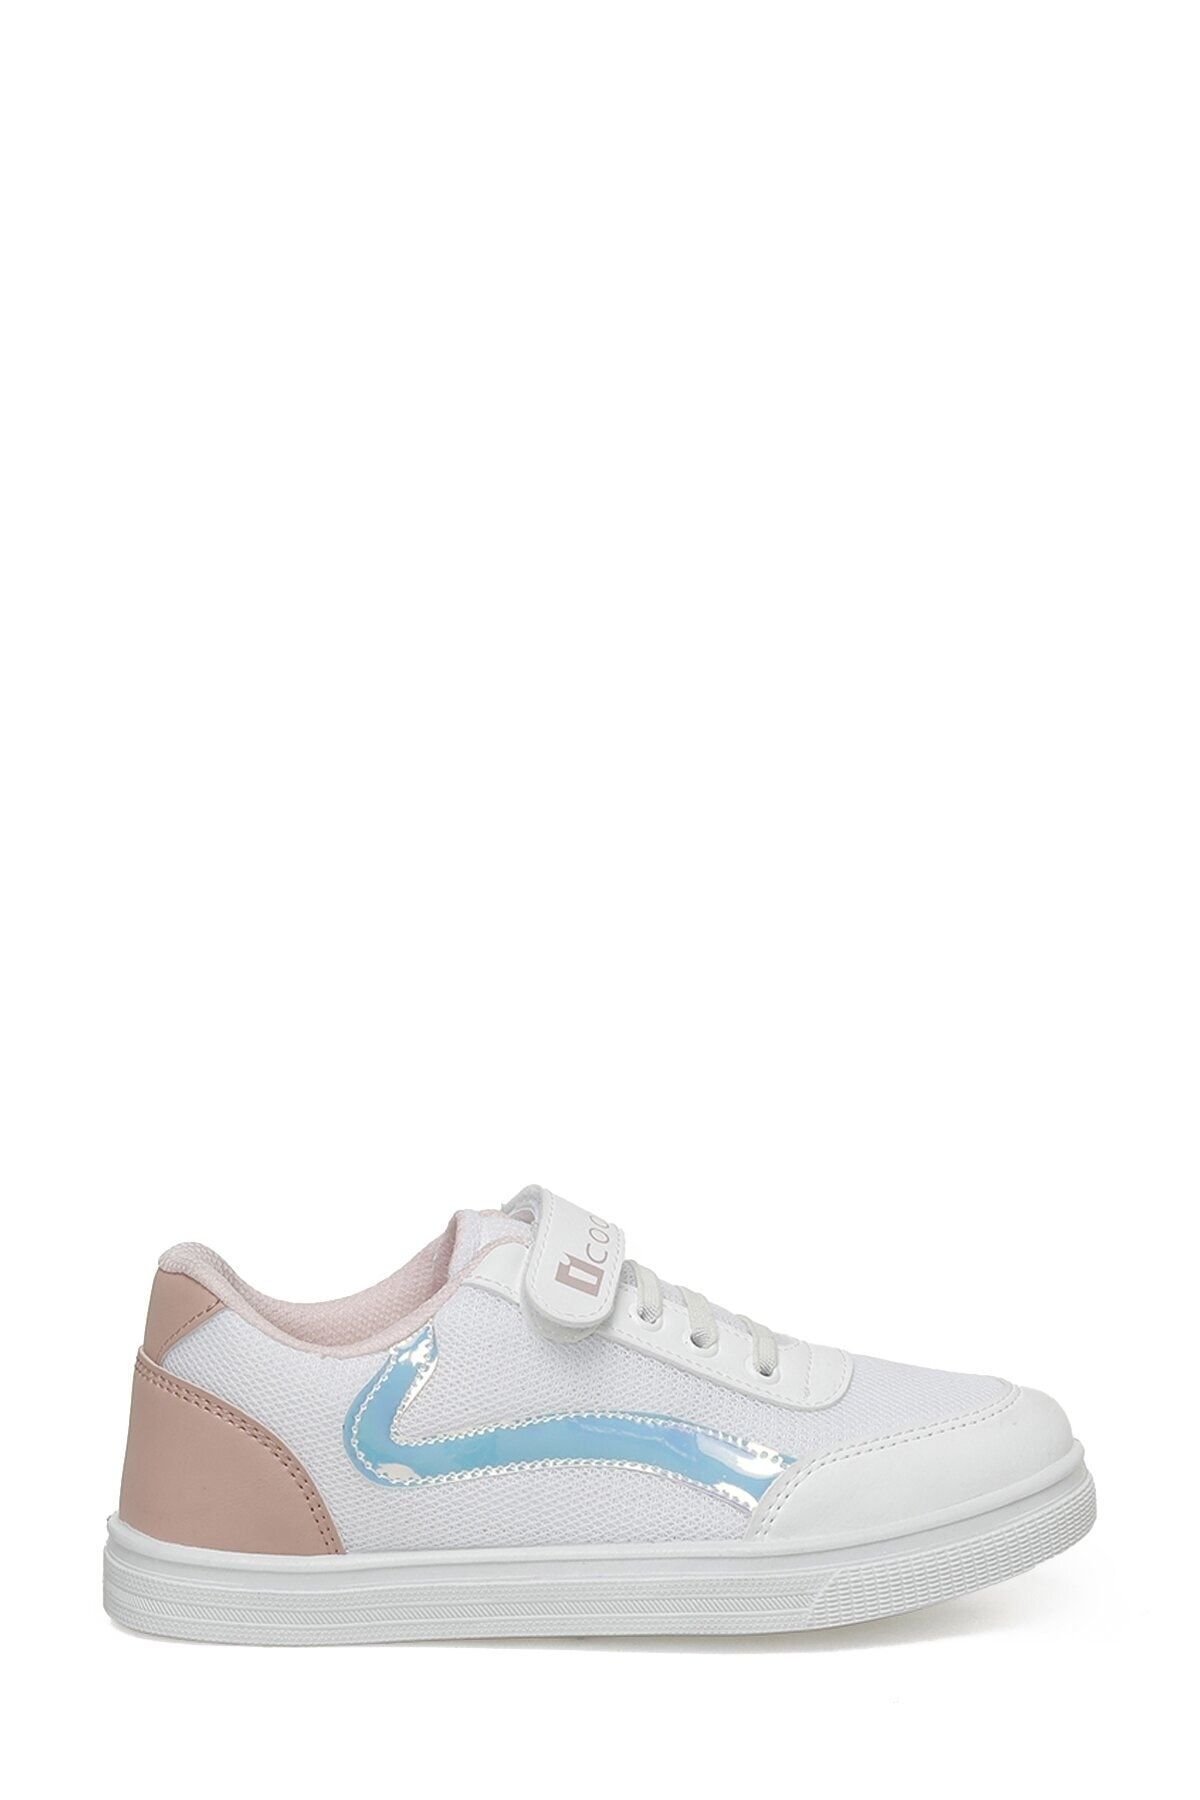 Icool Fermos 3fx Beyaz Kız Çocuk Sneaker